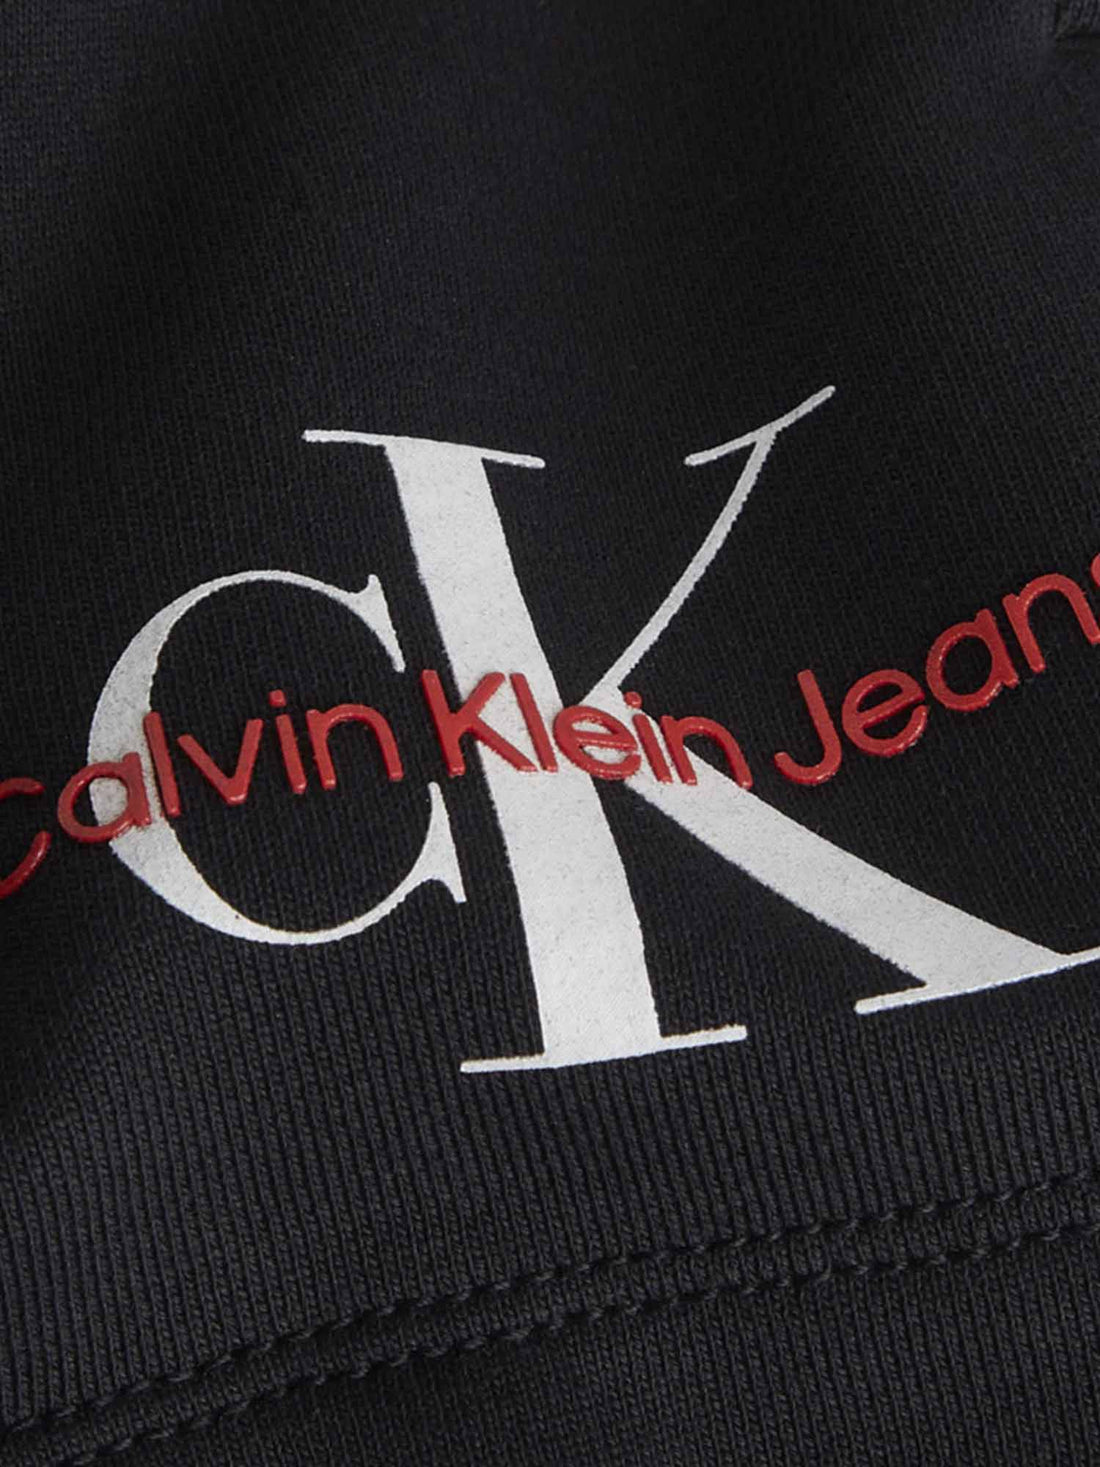 Shorts Nero Calvin Klein Jeans